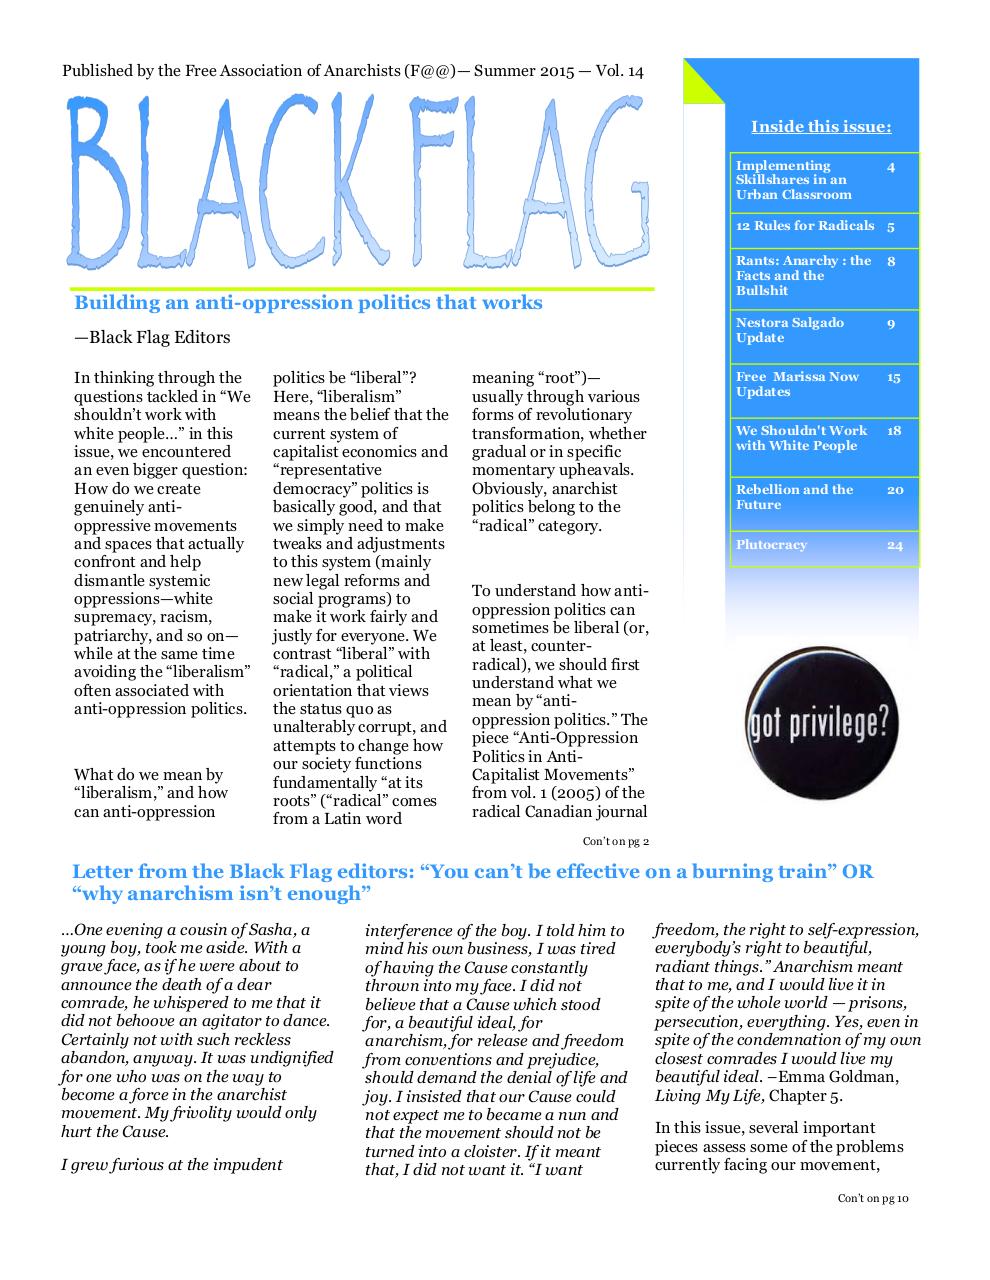 blck-flag-vol-14-summer-2015.pdf - page 1/26